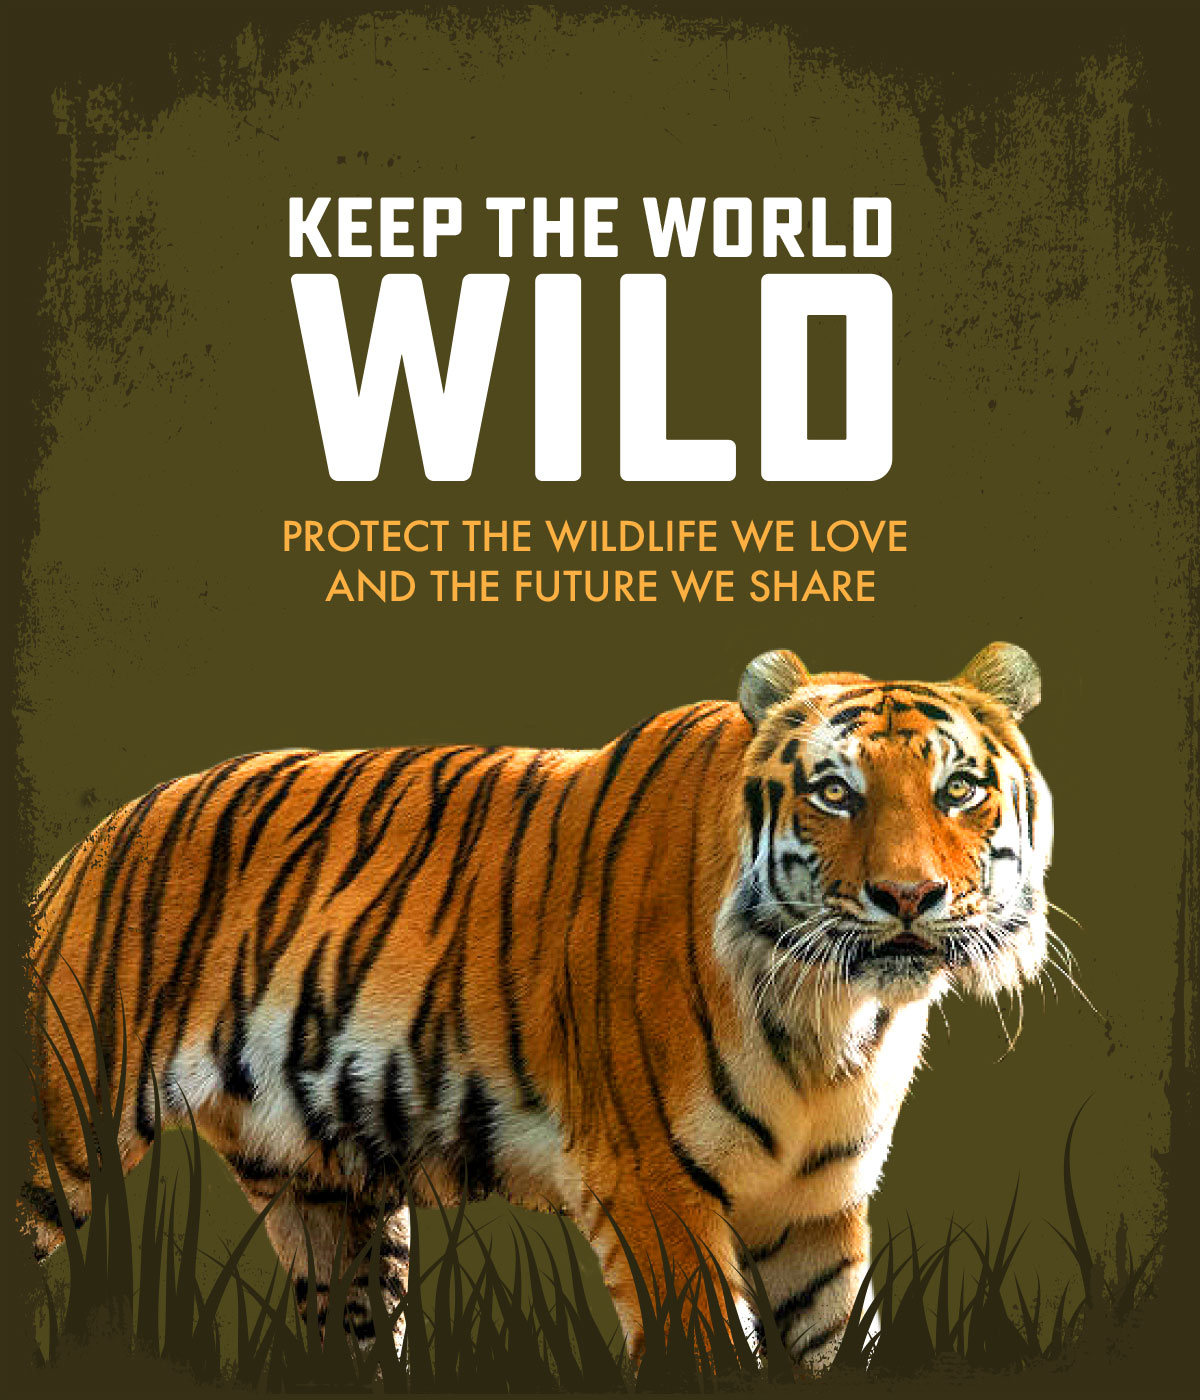 Keep the World Wild.